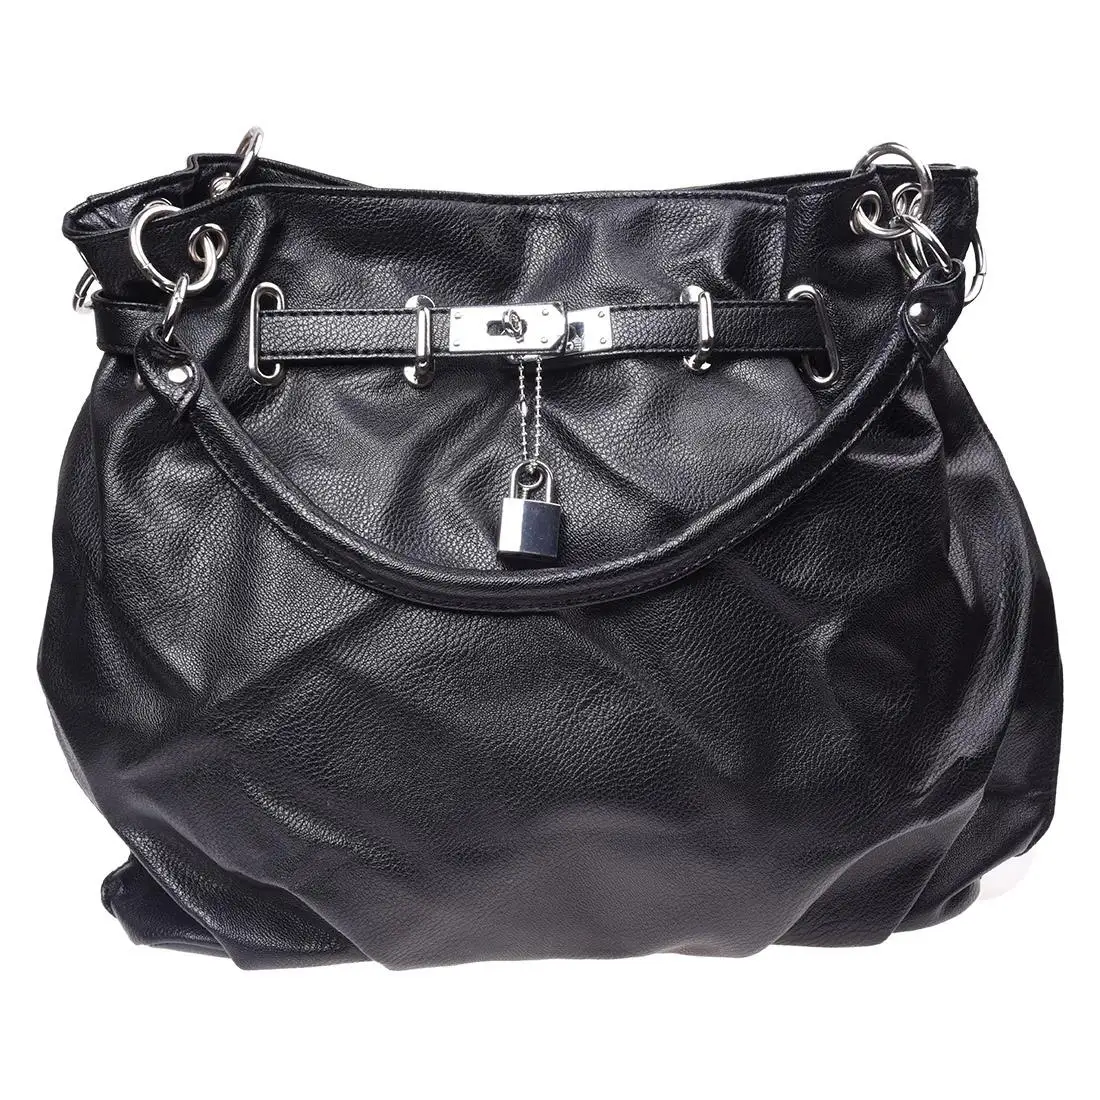 0 : Buy Women Girls PU Leather Hobo Handbag Bag Tote Shoulder Cross Body Black New ...